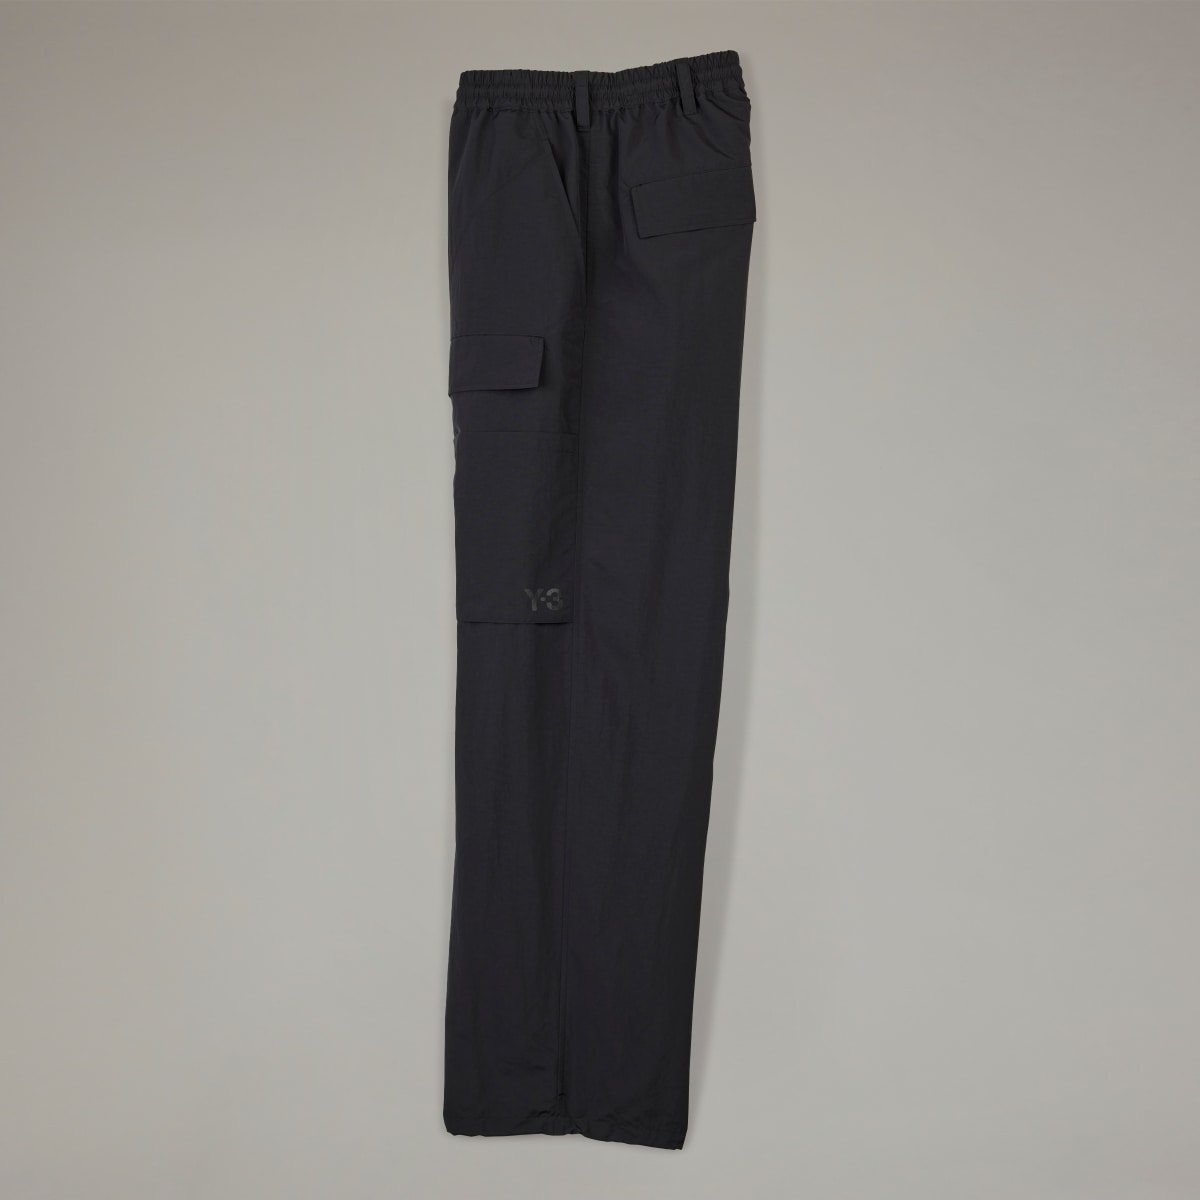 Adidas Y-3 Crinkle Nylon Pants. 5